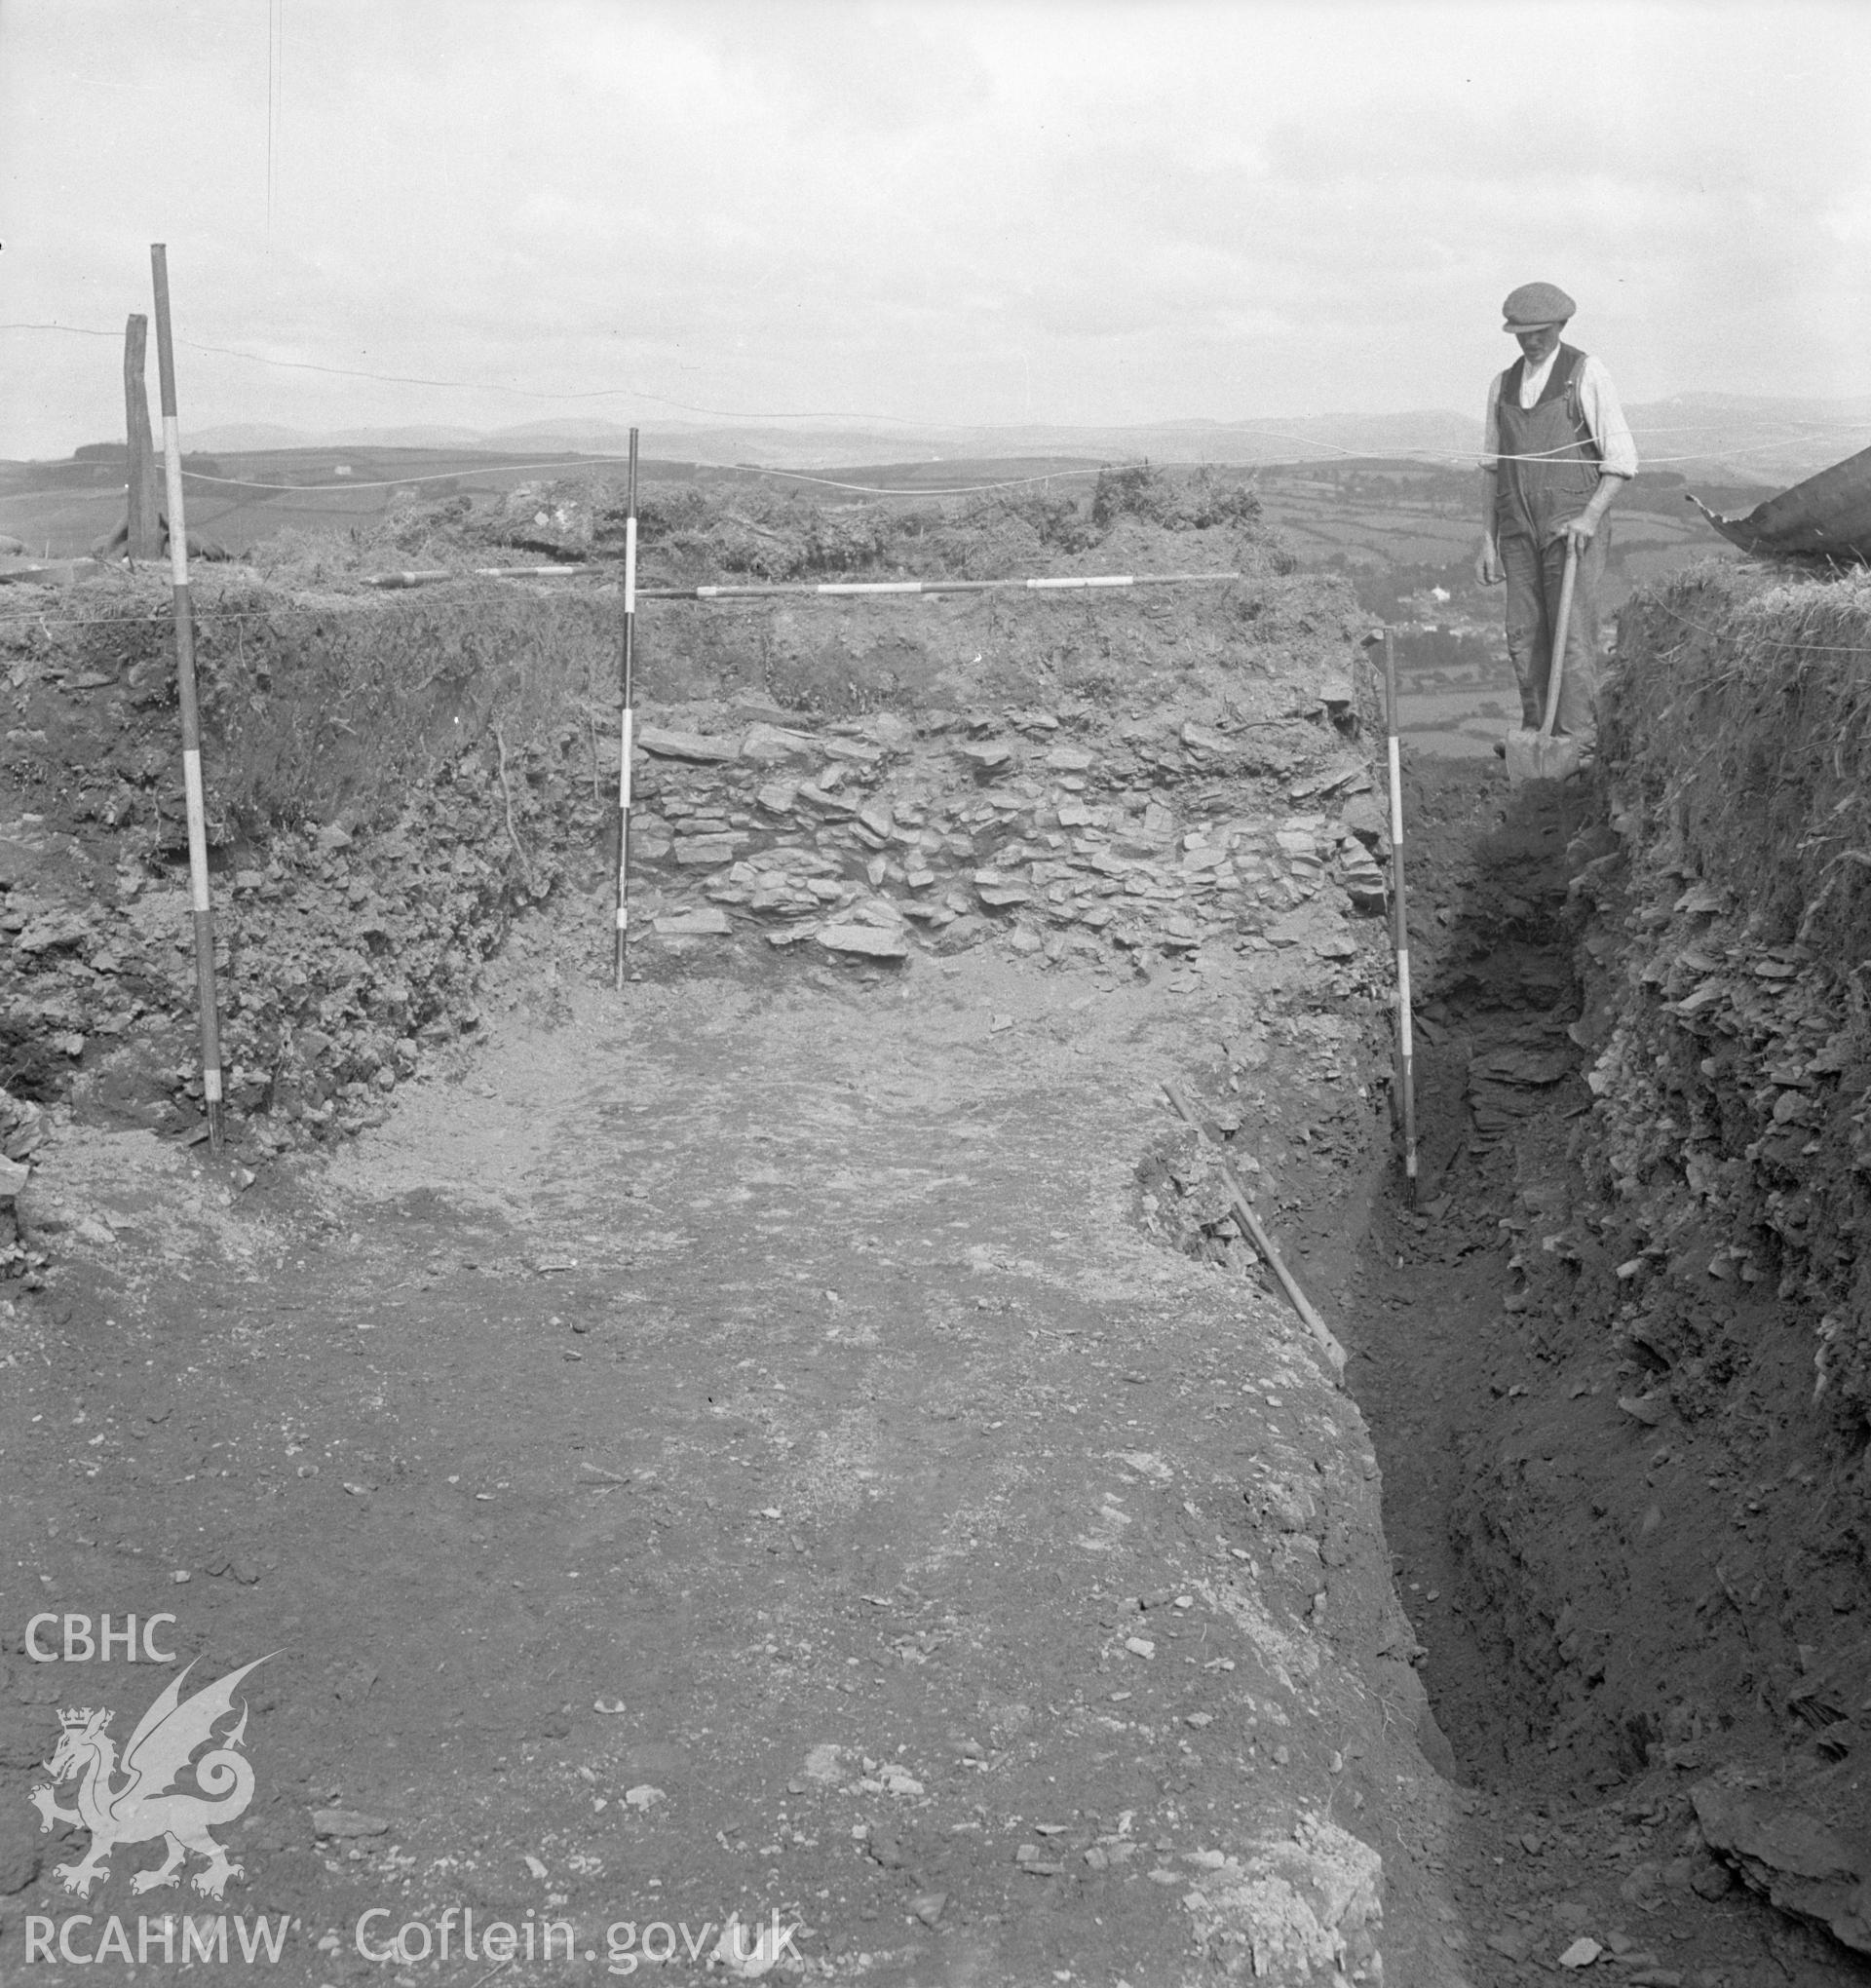 Excavation detail showing member of excavation team at work